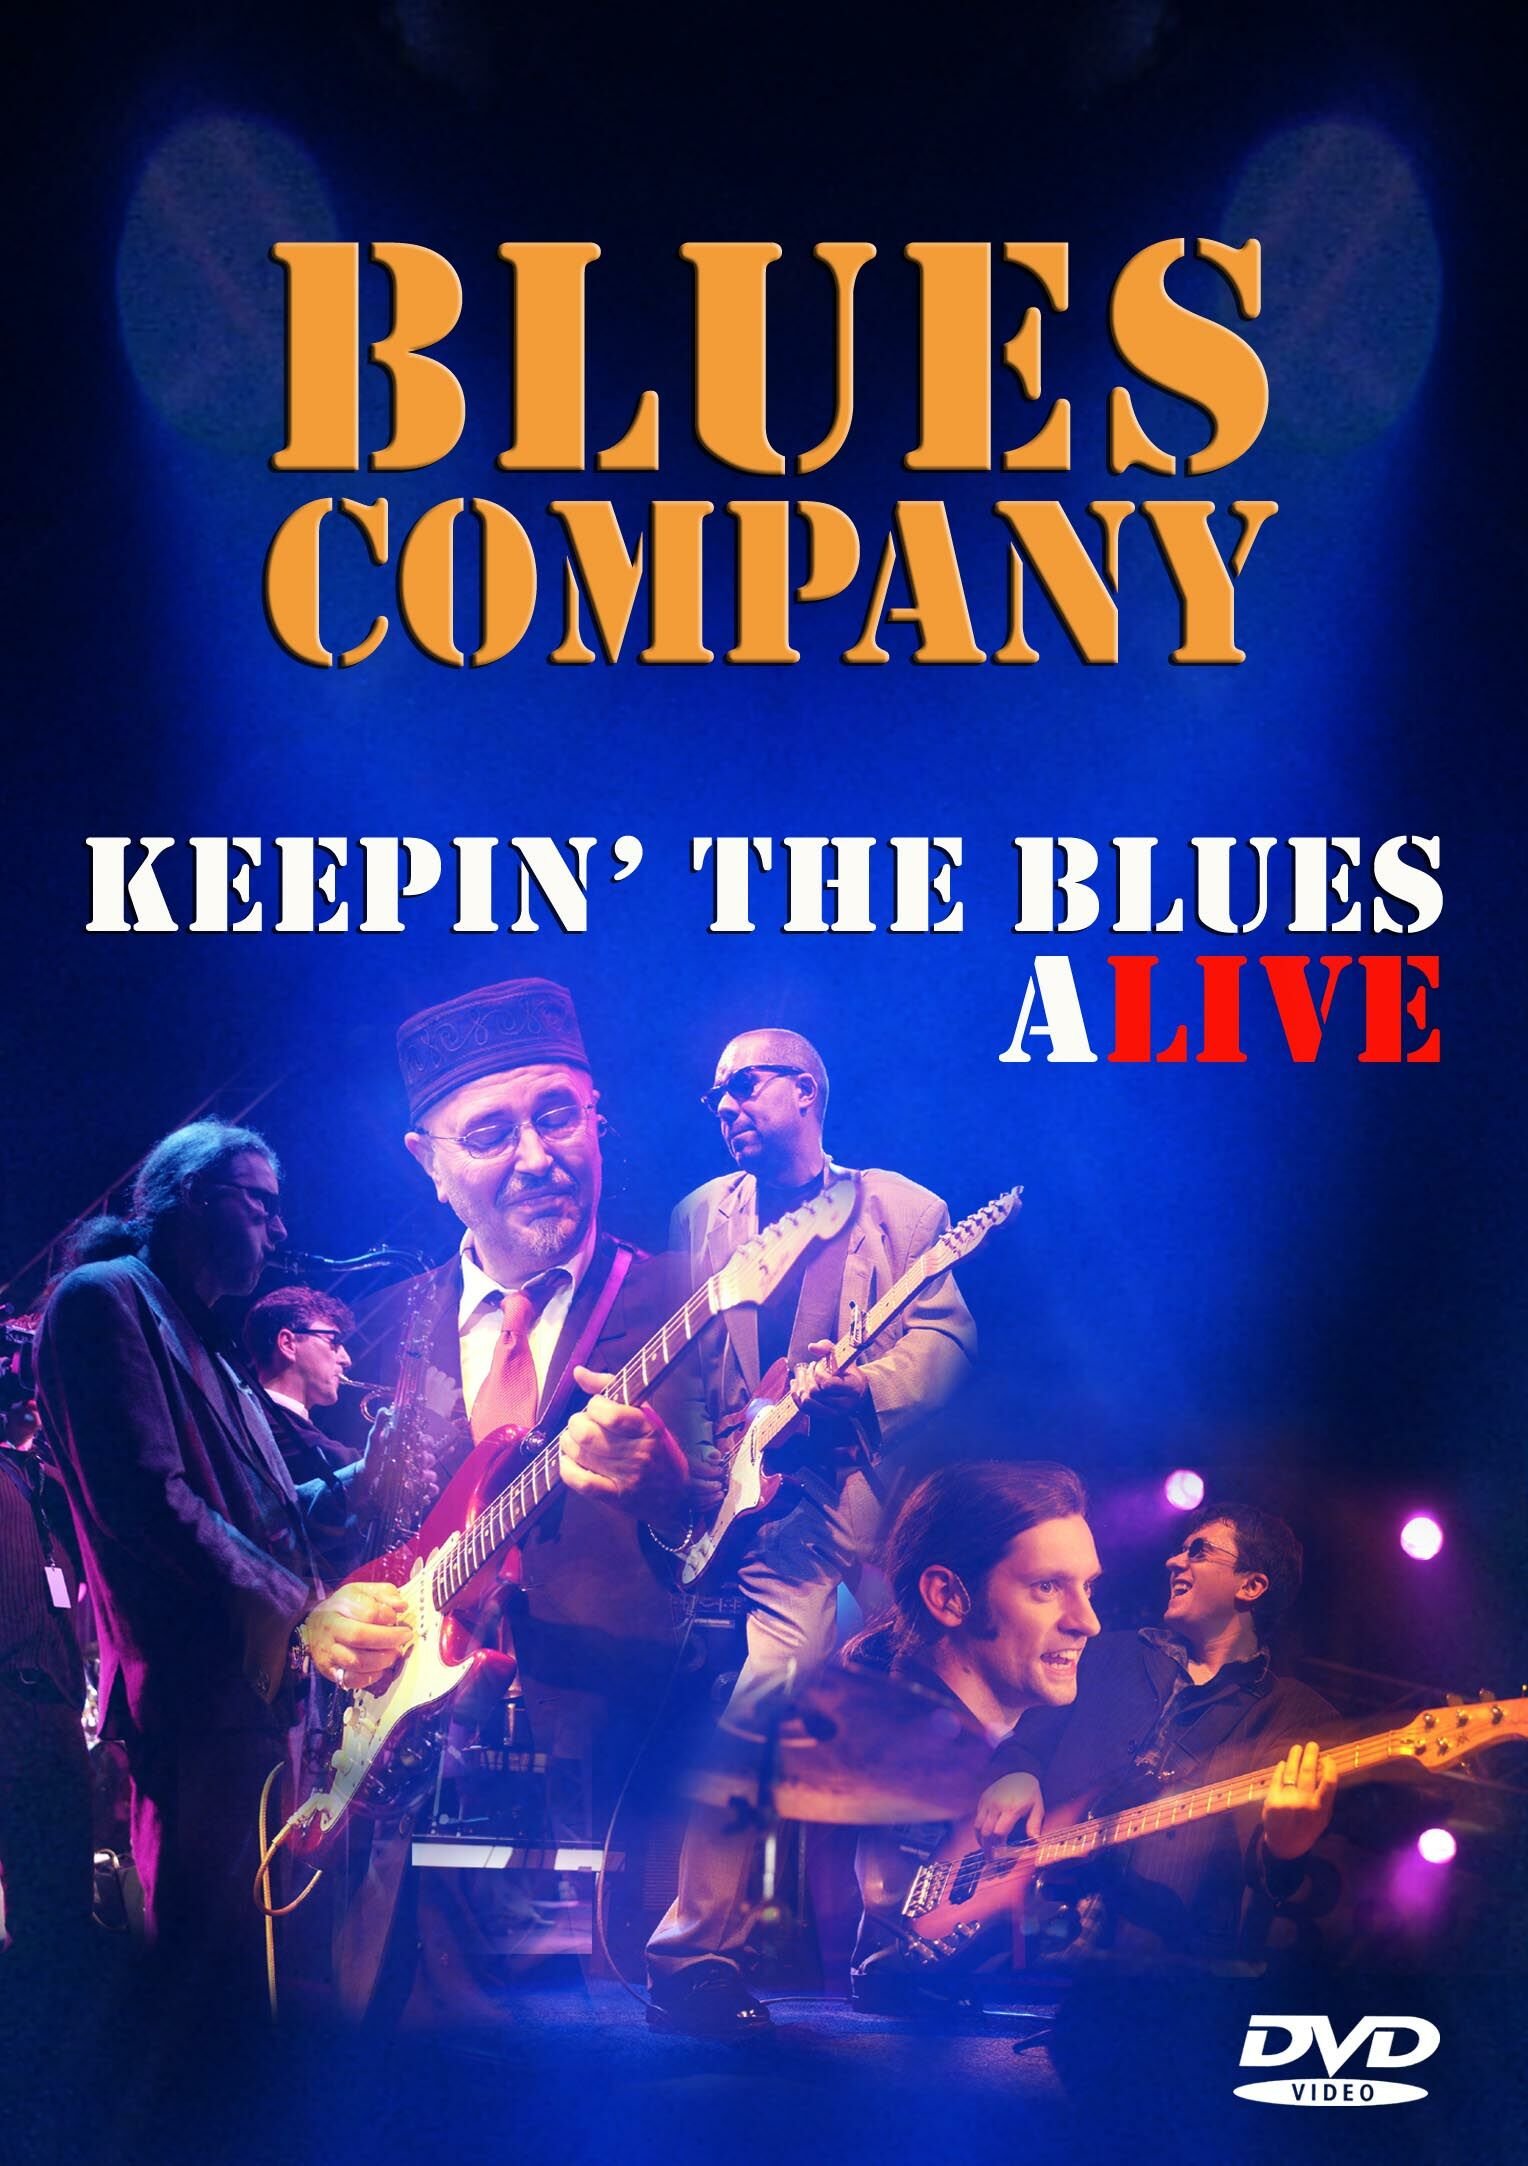 Blues Company - Keepin' the Blues alive